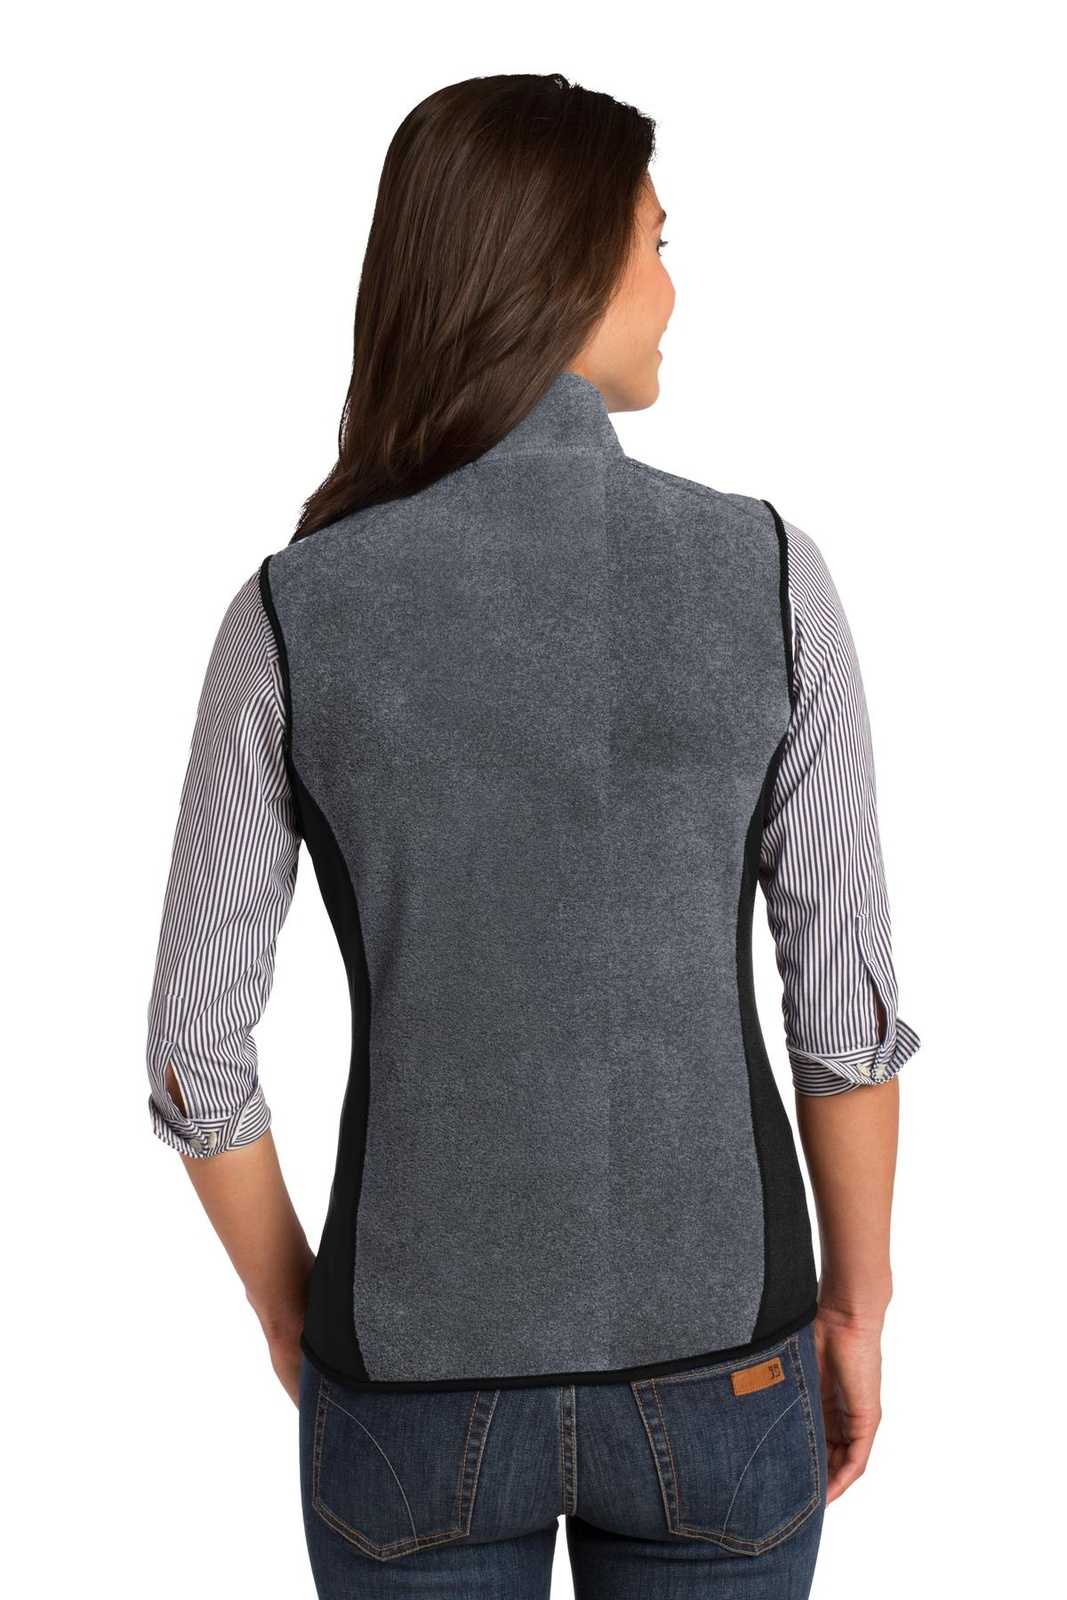 Port Authority L228 Ladies R-Tek Pro Fleece Full-Zip Vest - Charcoal Heather Black - HIT a Double - 2